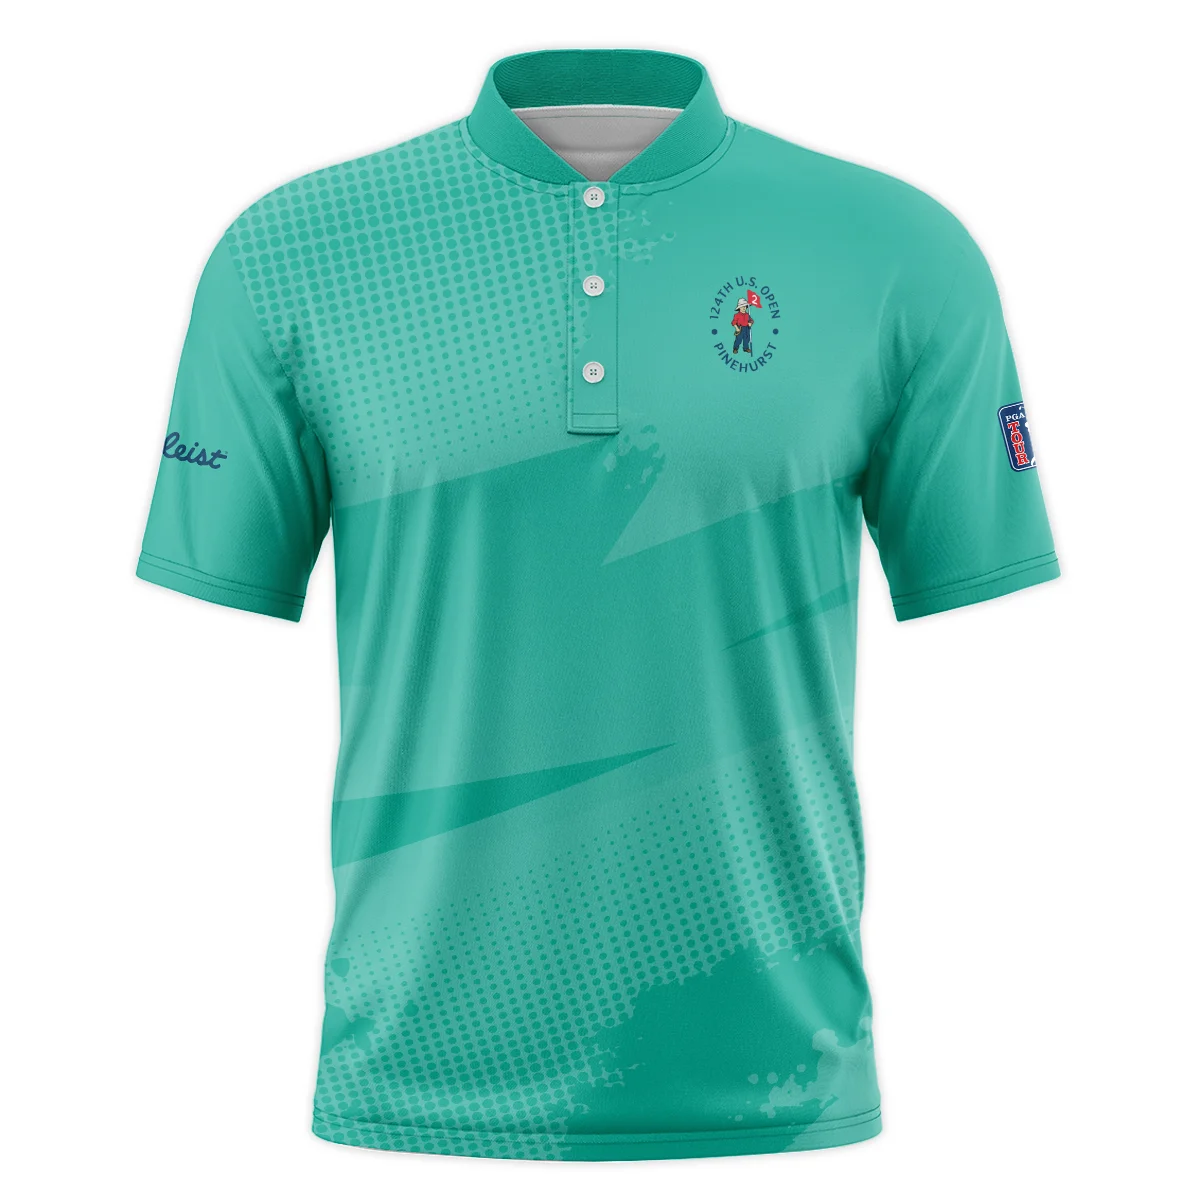 Golf Sport Pattern Green Mix Color 124th U.S. Open Pinehurst Ping Vneck Polo Shirt Style Classic